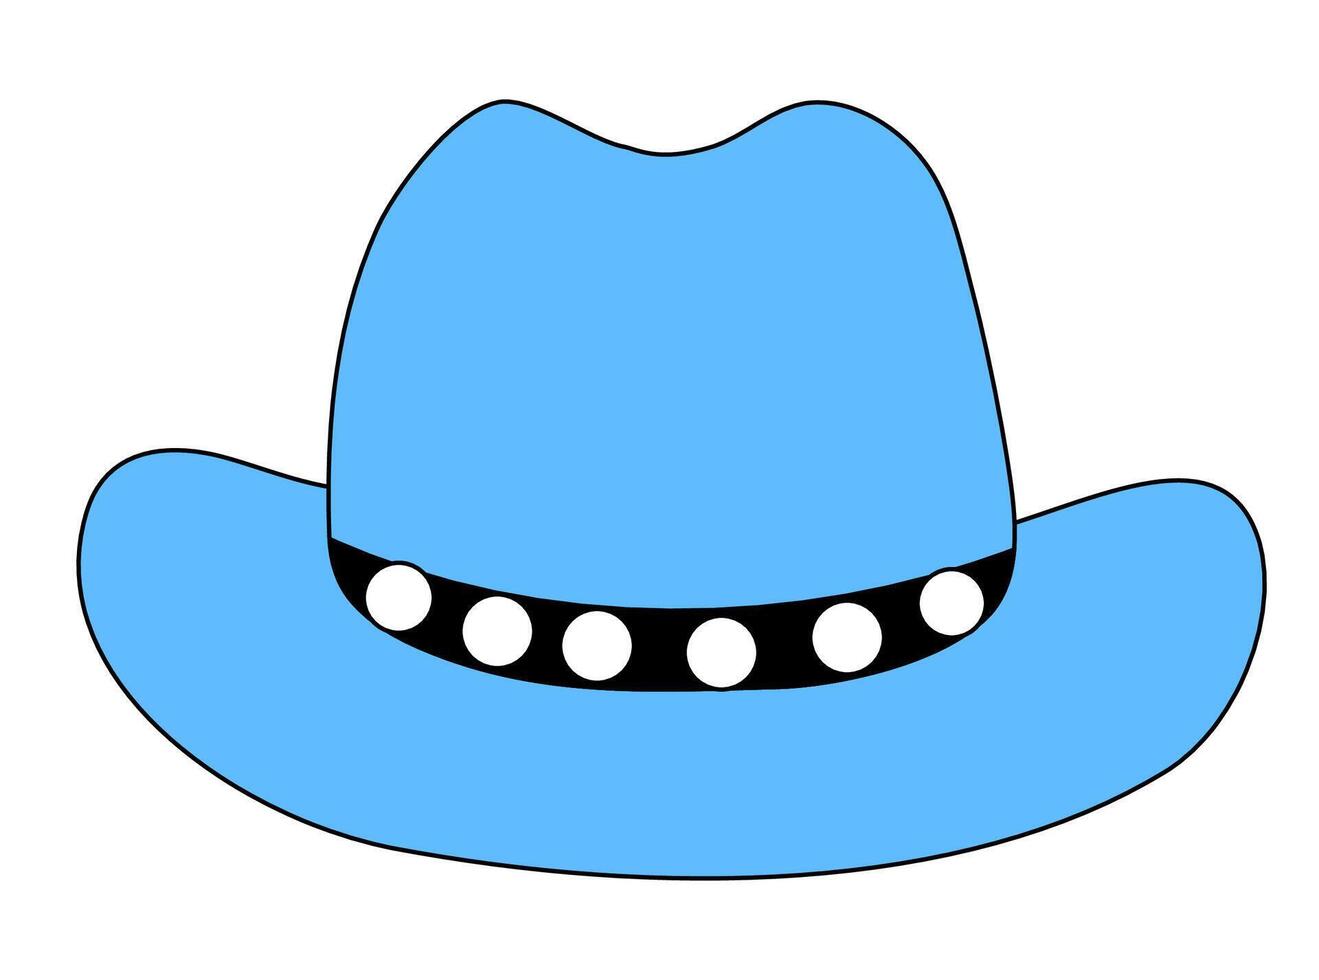 Retro blue Cowgirl hat. Cowboy western and wild west theme. Icon, sticker, emblem, logo design. Hand drawn isolated vector flat illustration.